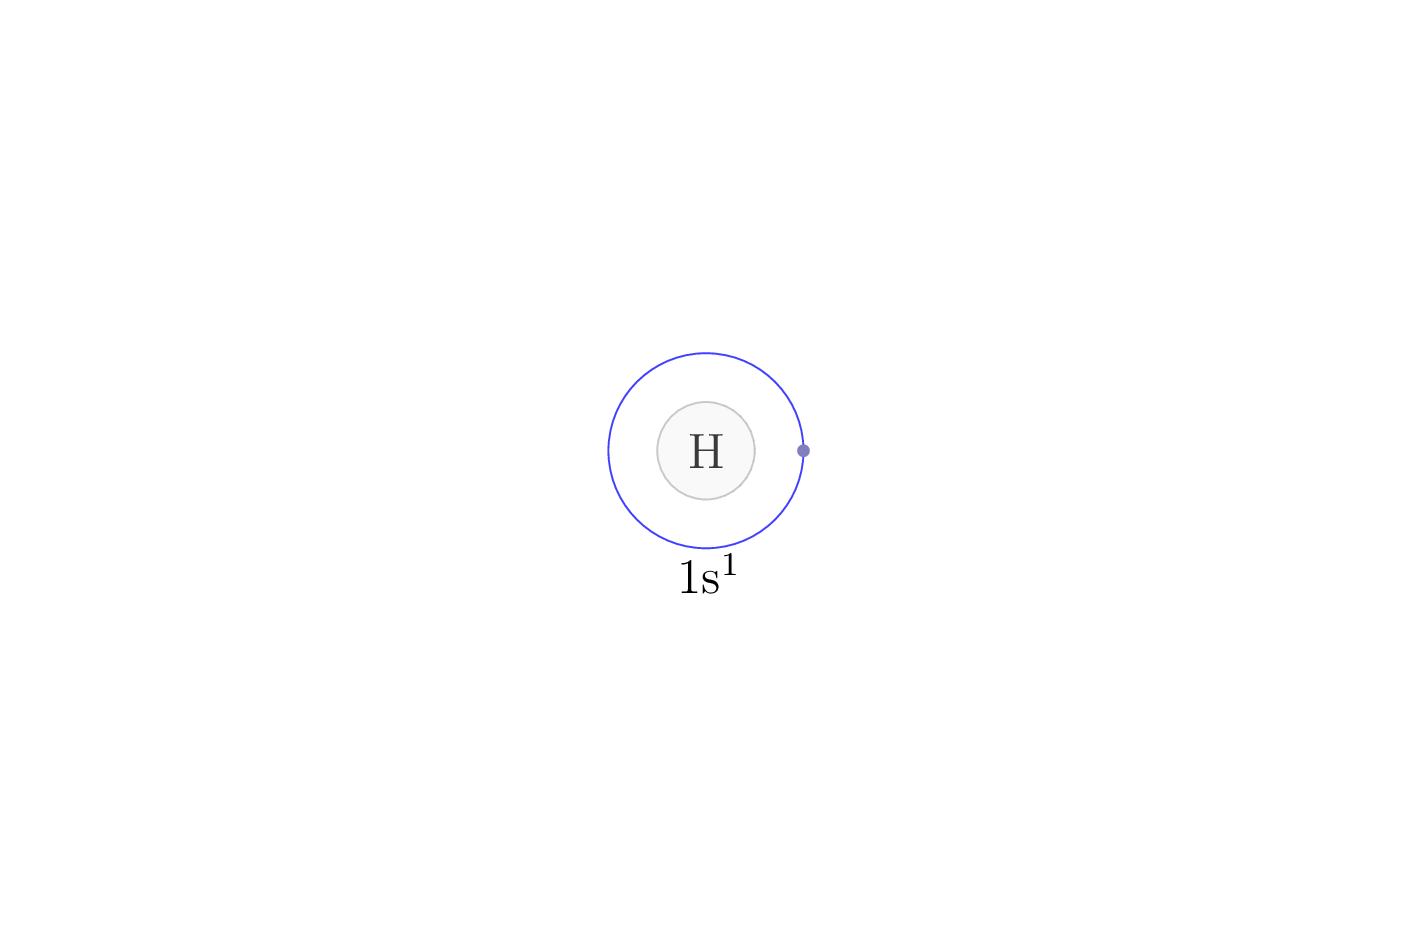 electron configuration of element H